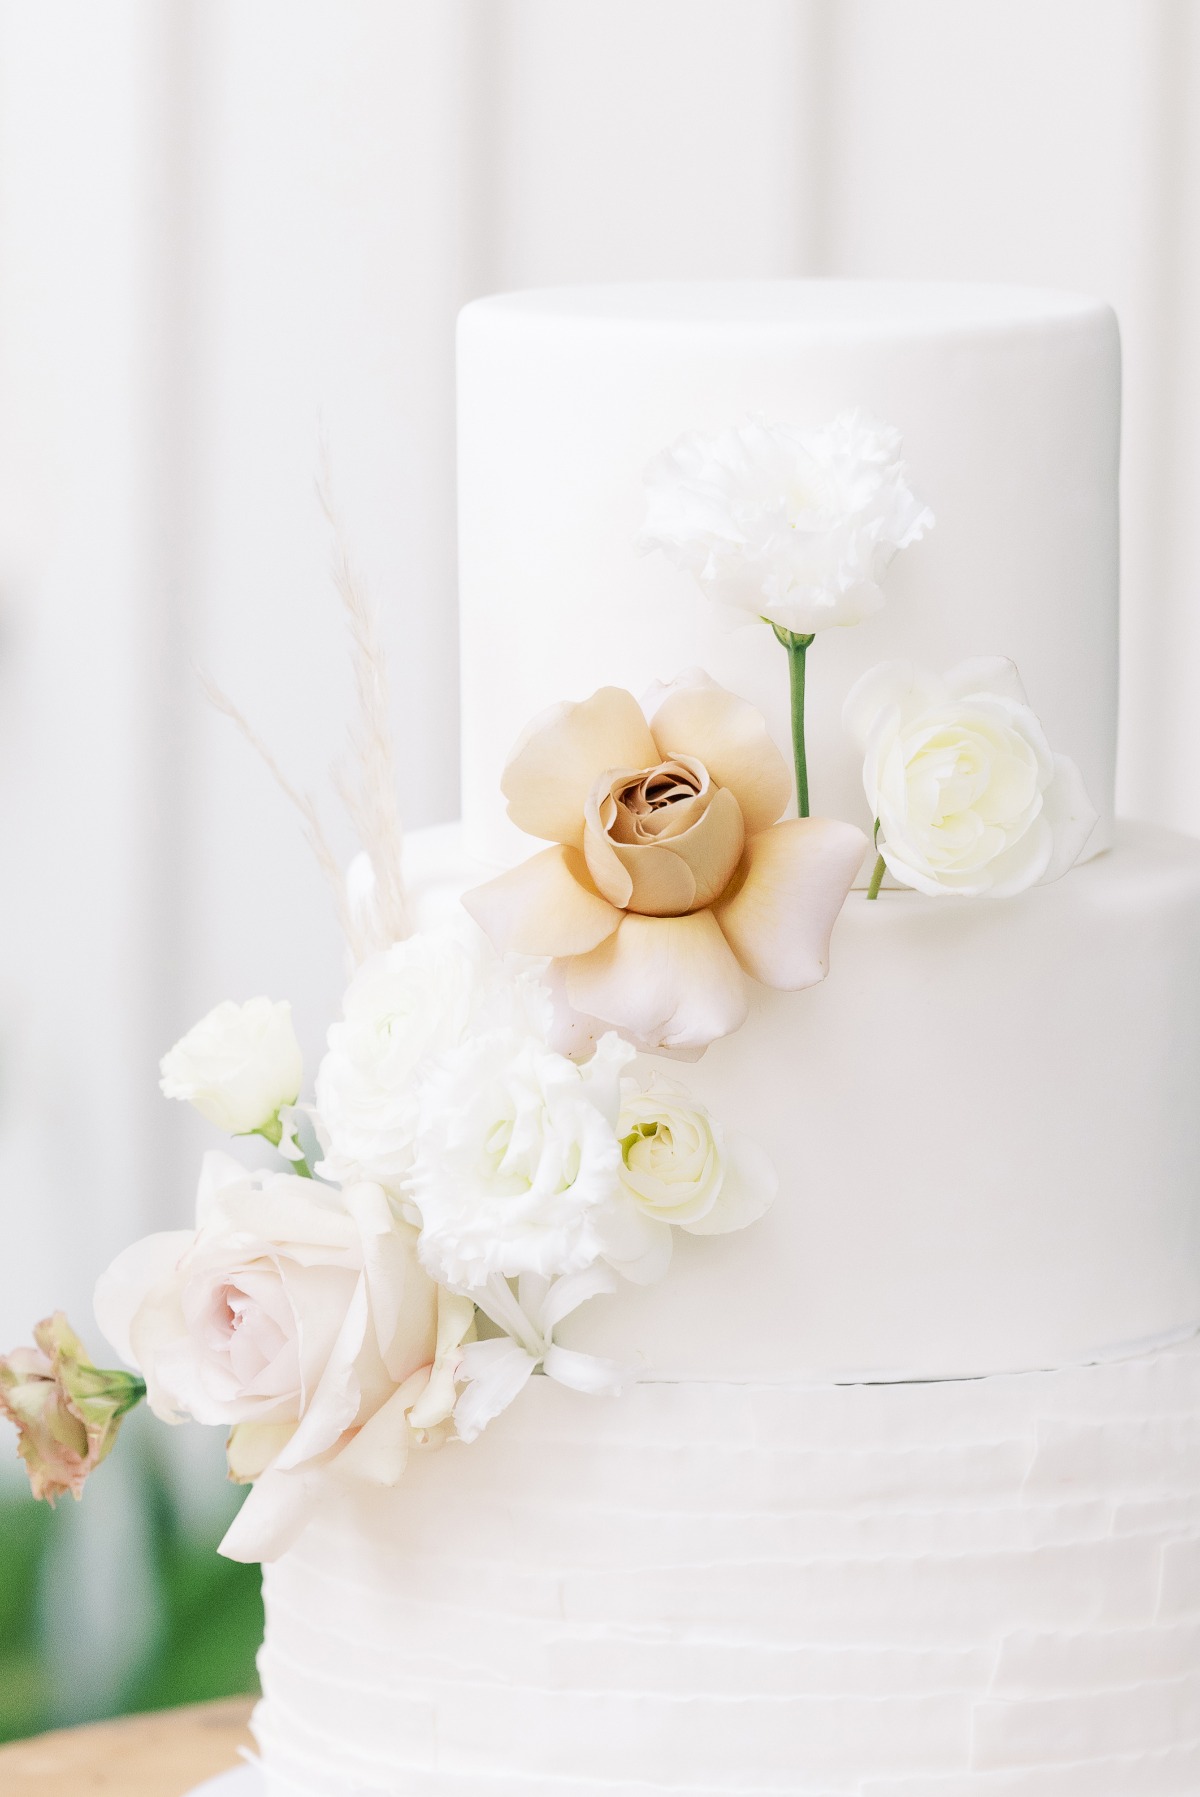 Wedding cake close-up